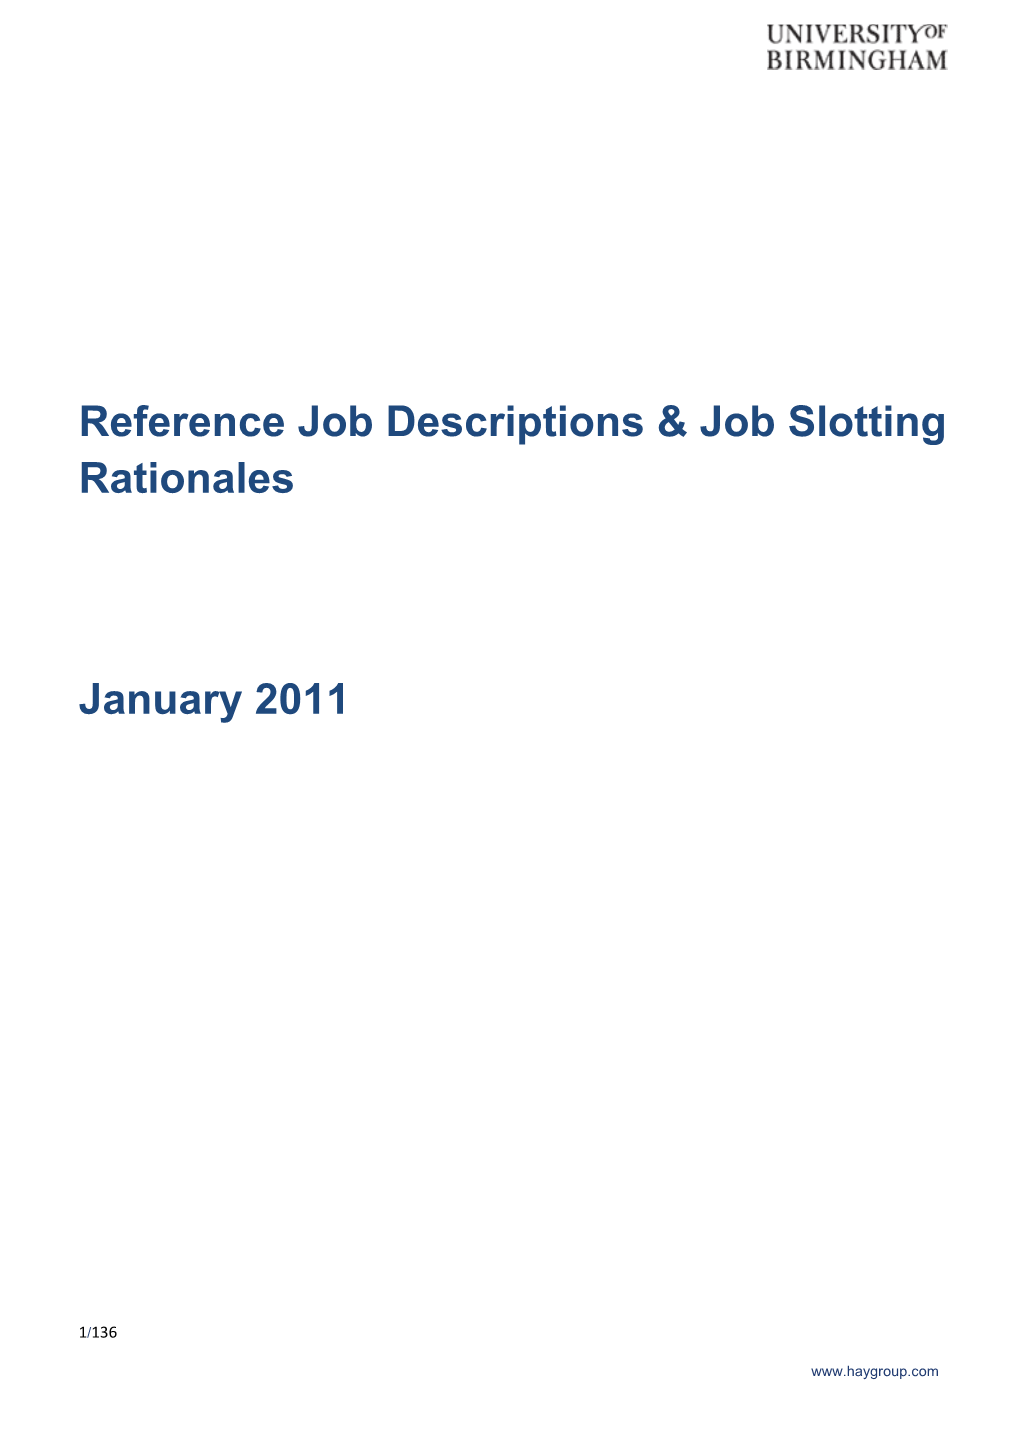 Reference Job Descriptions & Job Slotting Rationales